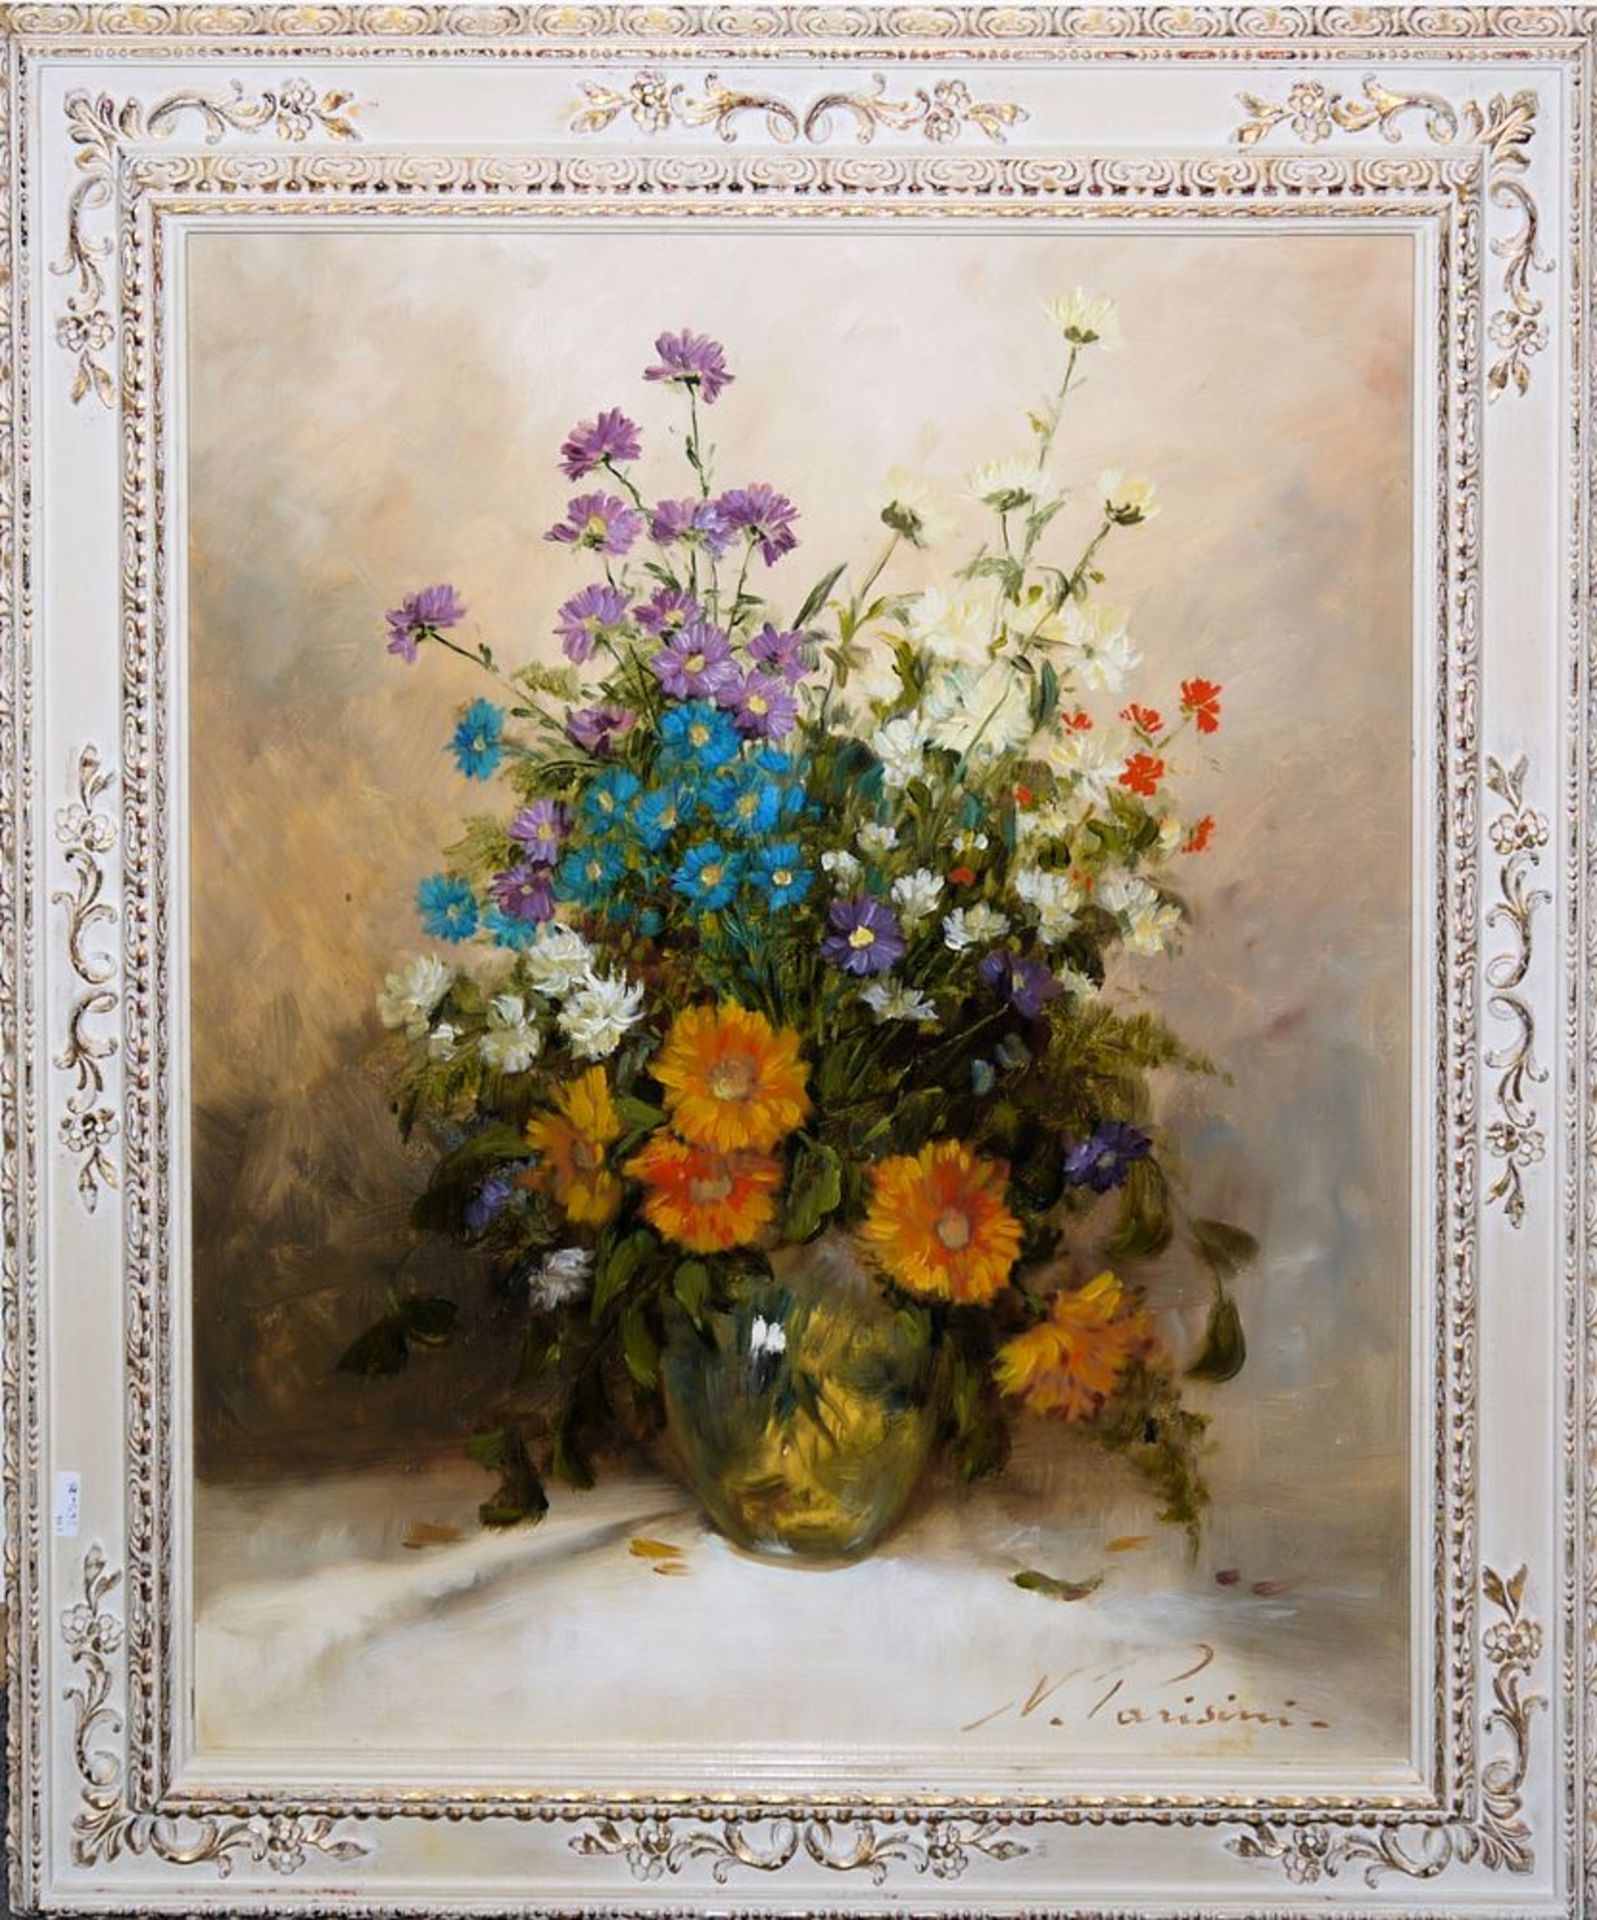 Nicole Parisini, "Bunter Blumenstrauß in Glaskugelvase", Ölgemälde, prachtvolle